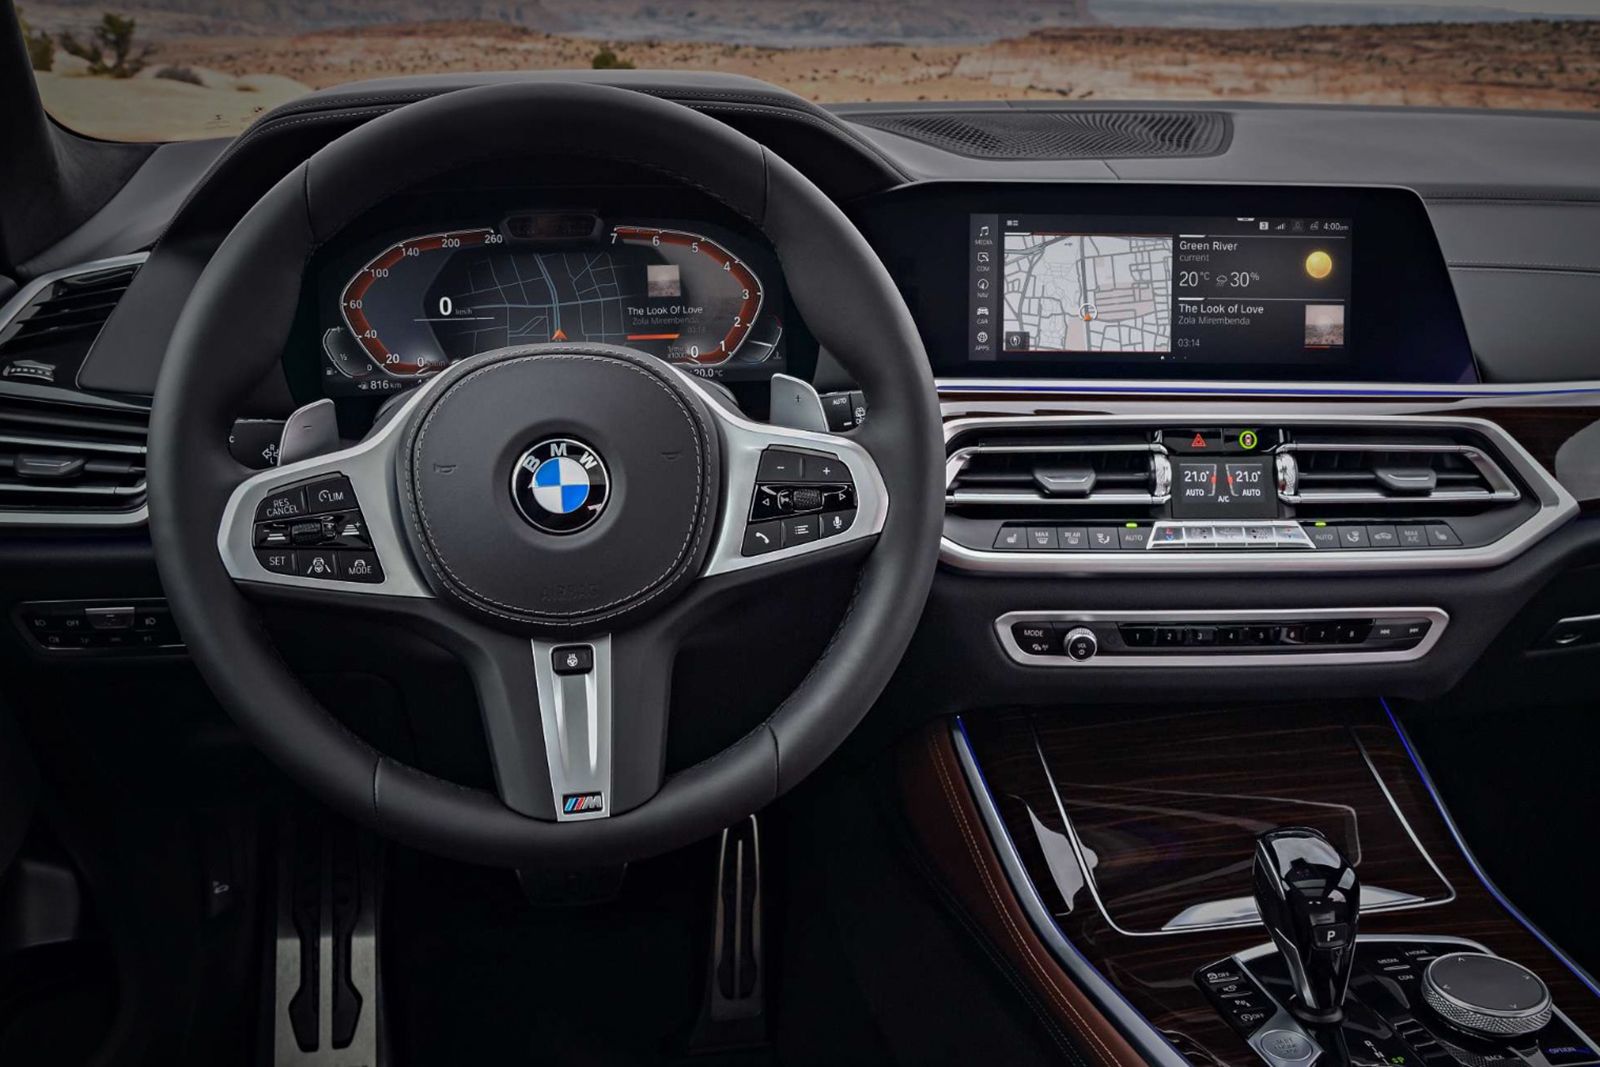 BMW image 1